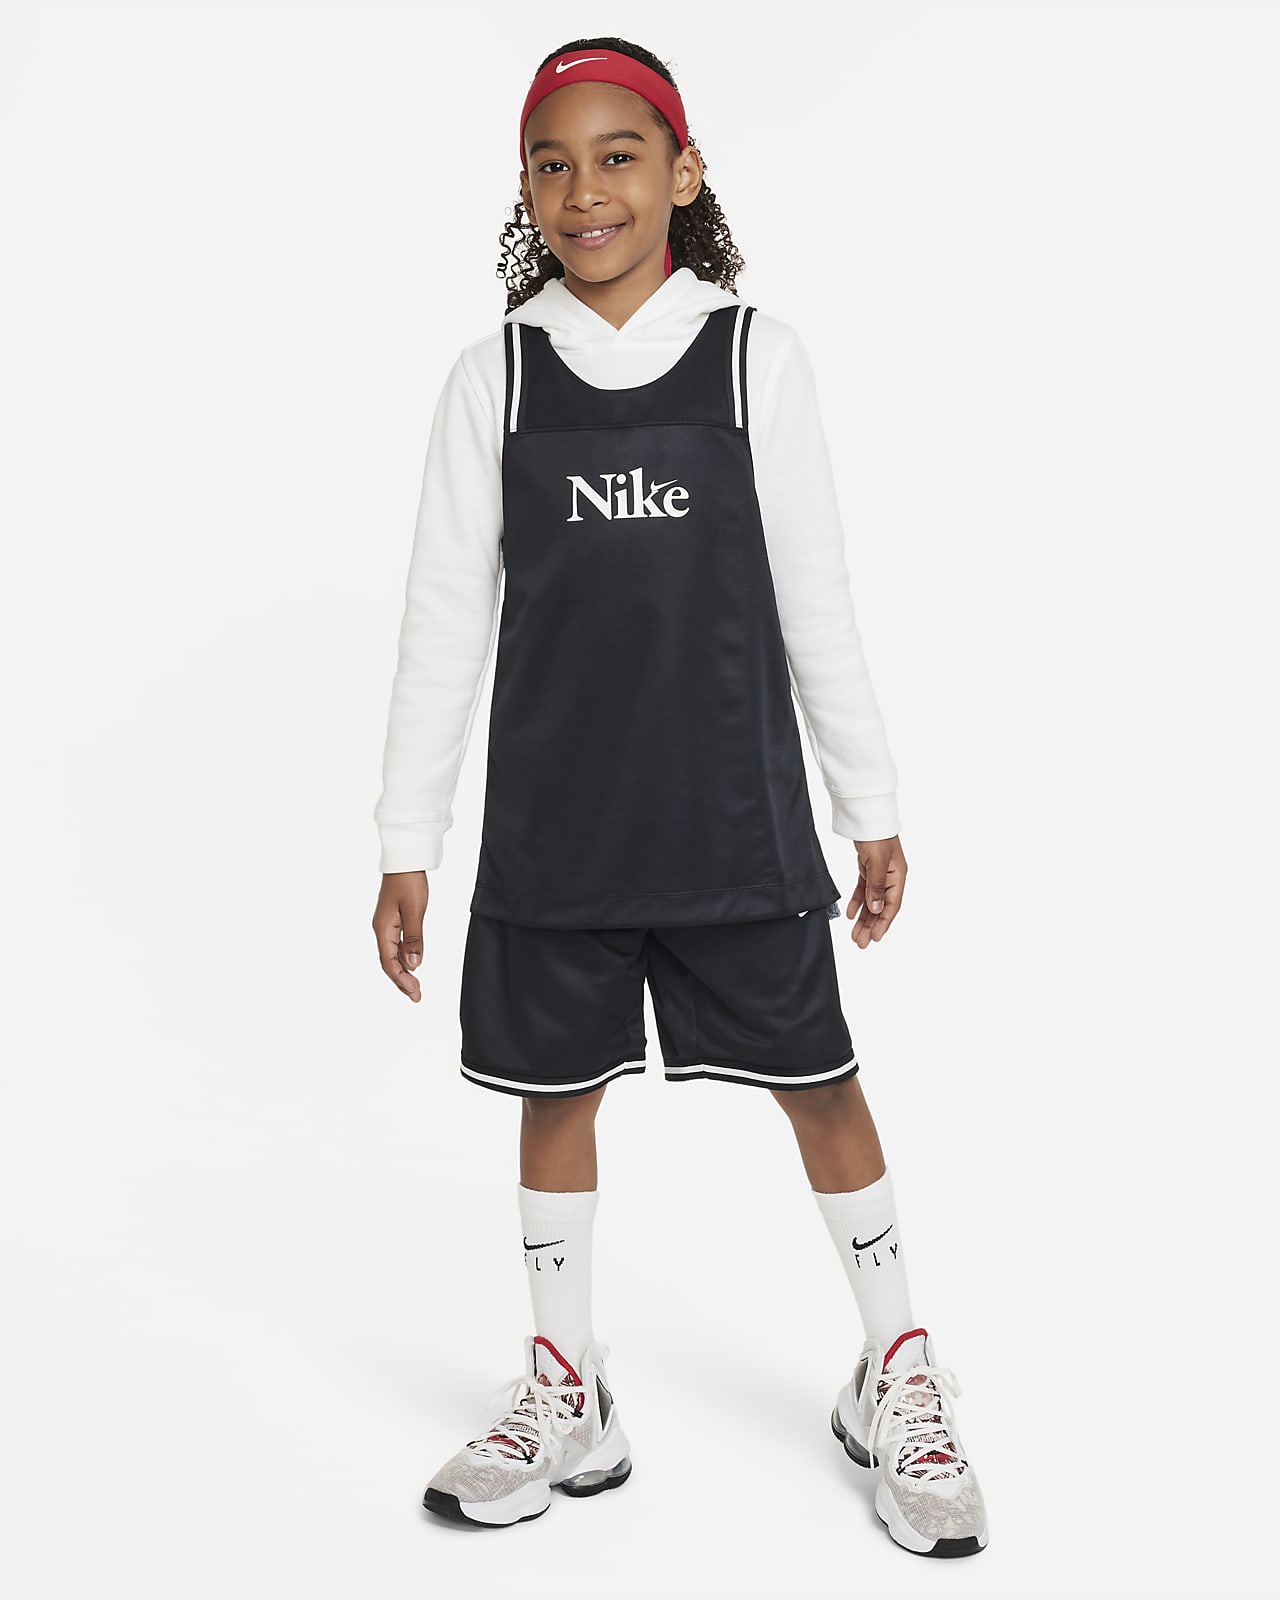 Nike Culture of Basketball Older Kids' Reversible Basketball Jersey